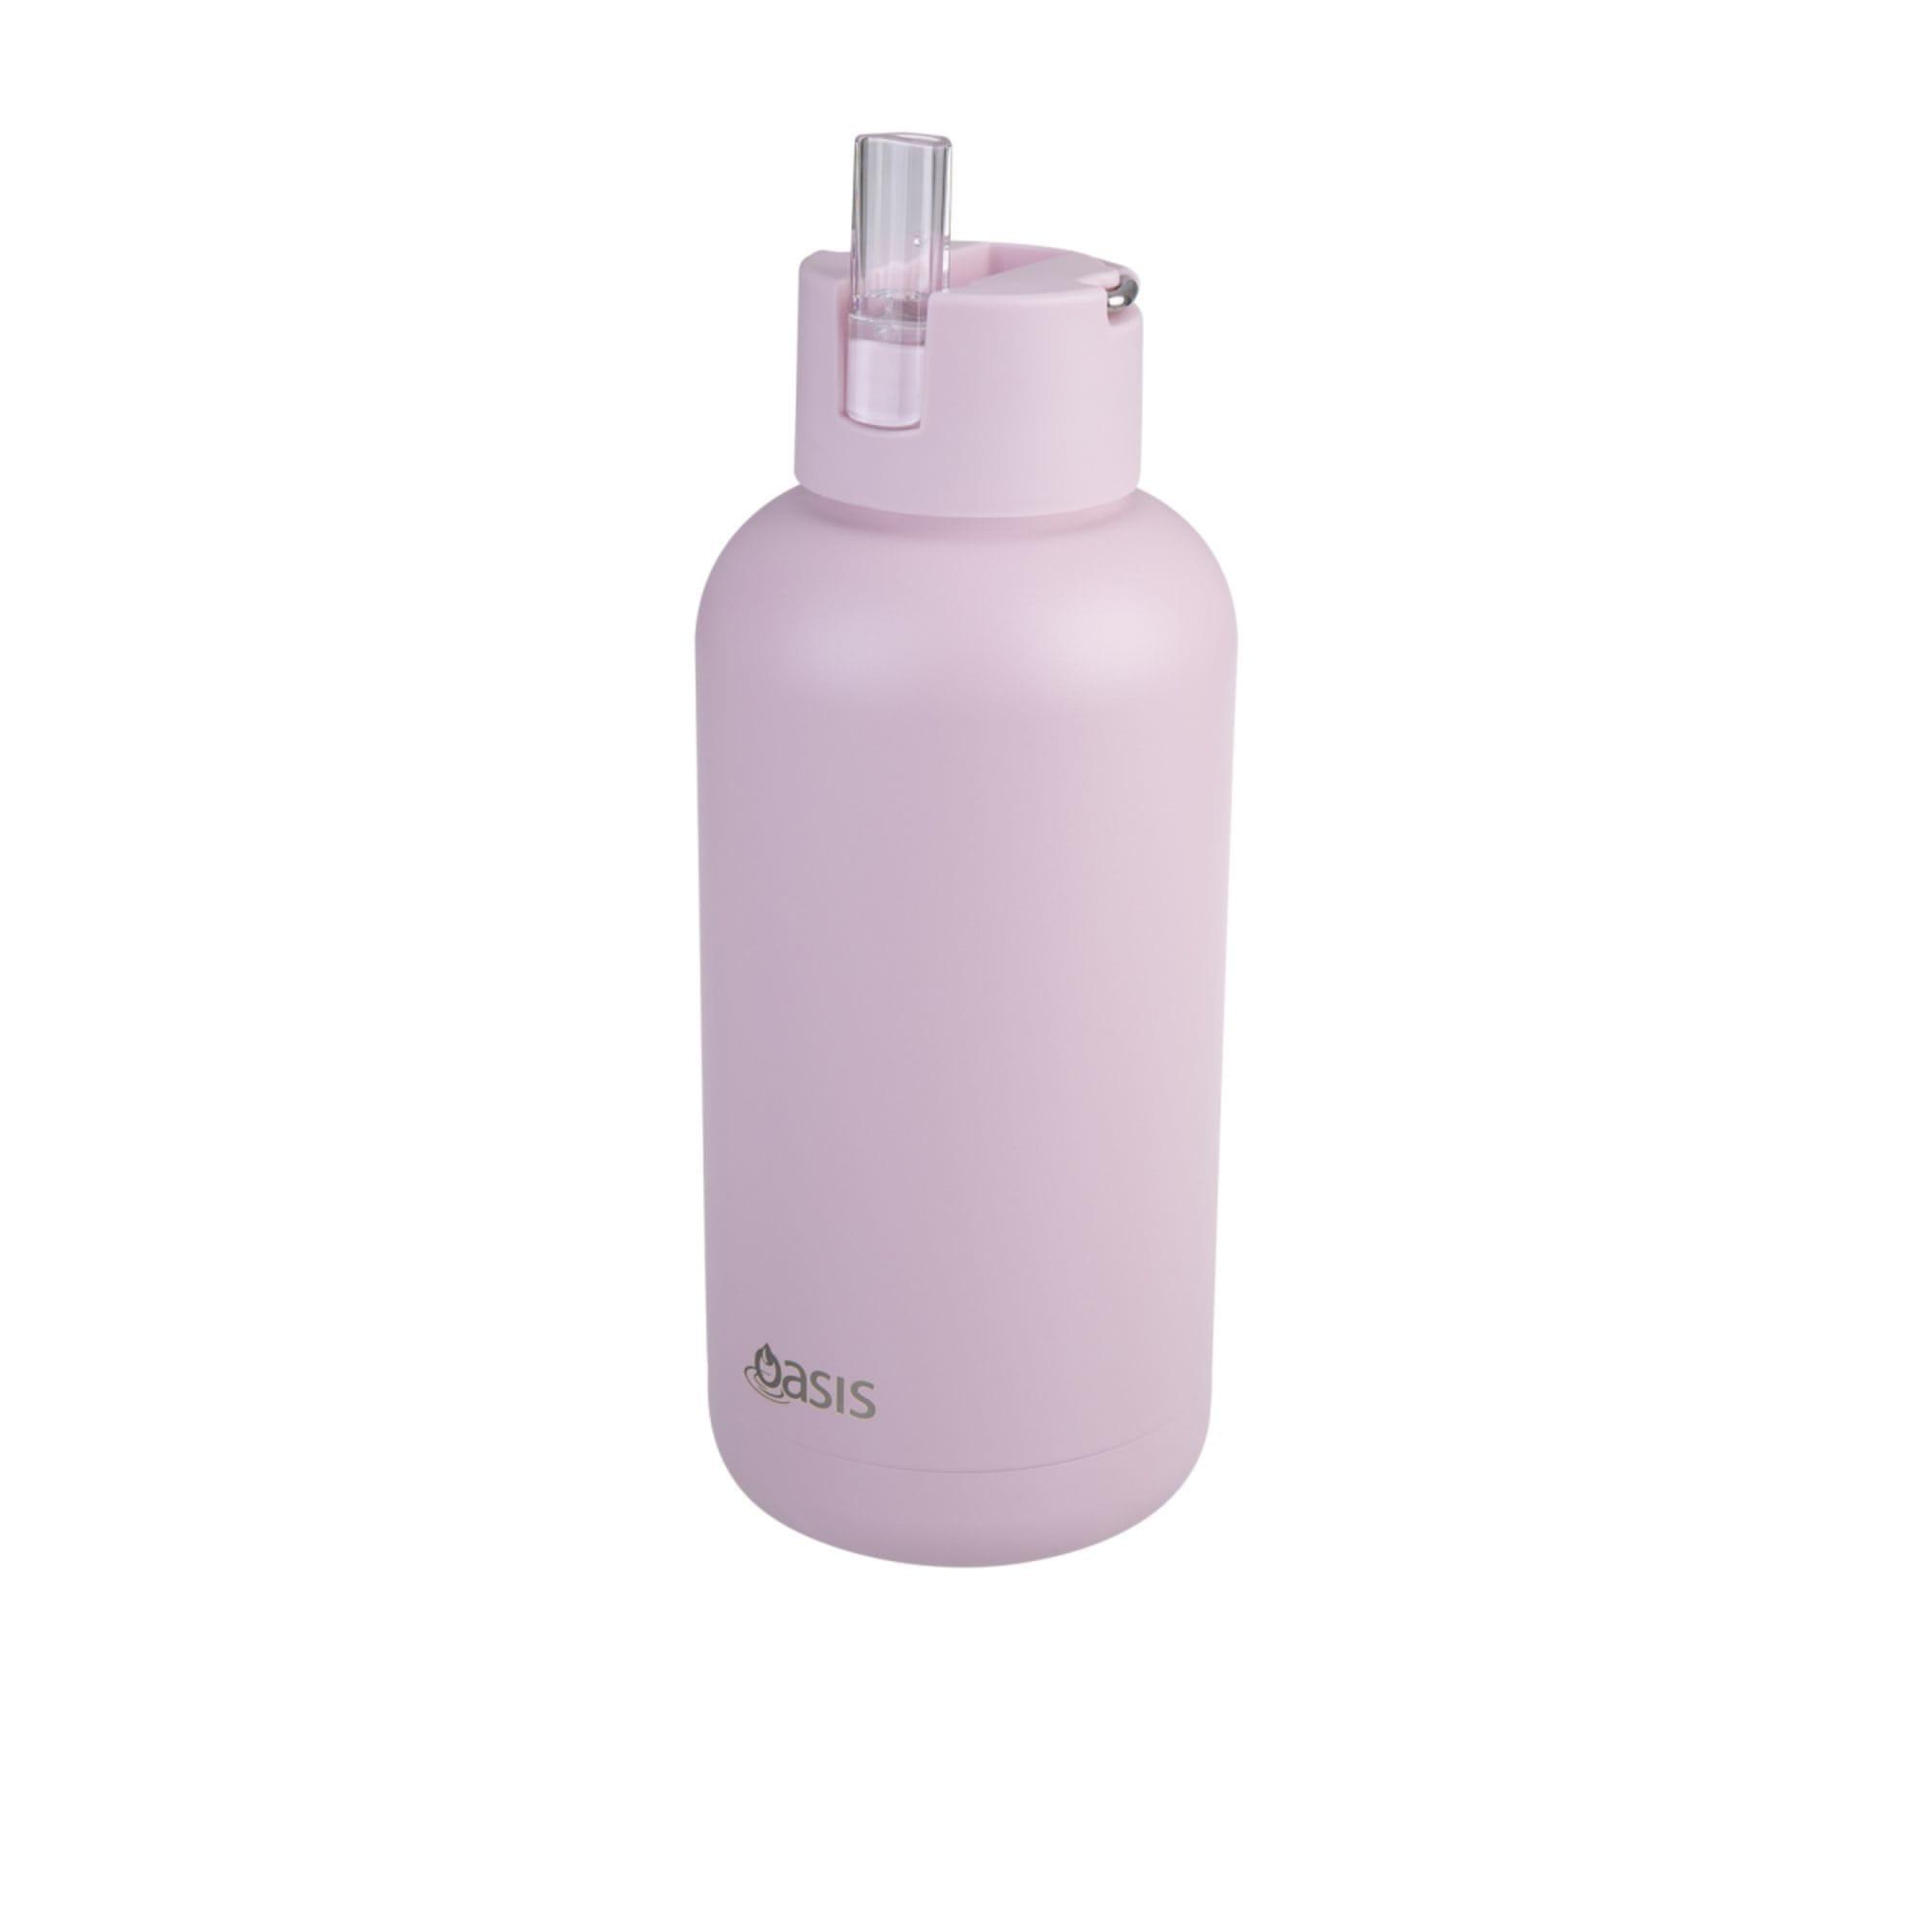 Oasis Moda Triple Wall Insulated Drink Bottle 1.5L Pink Lemonade Image 5